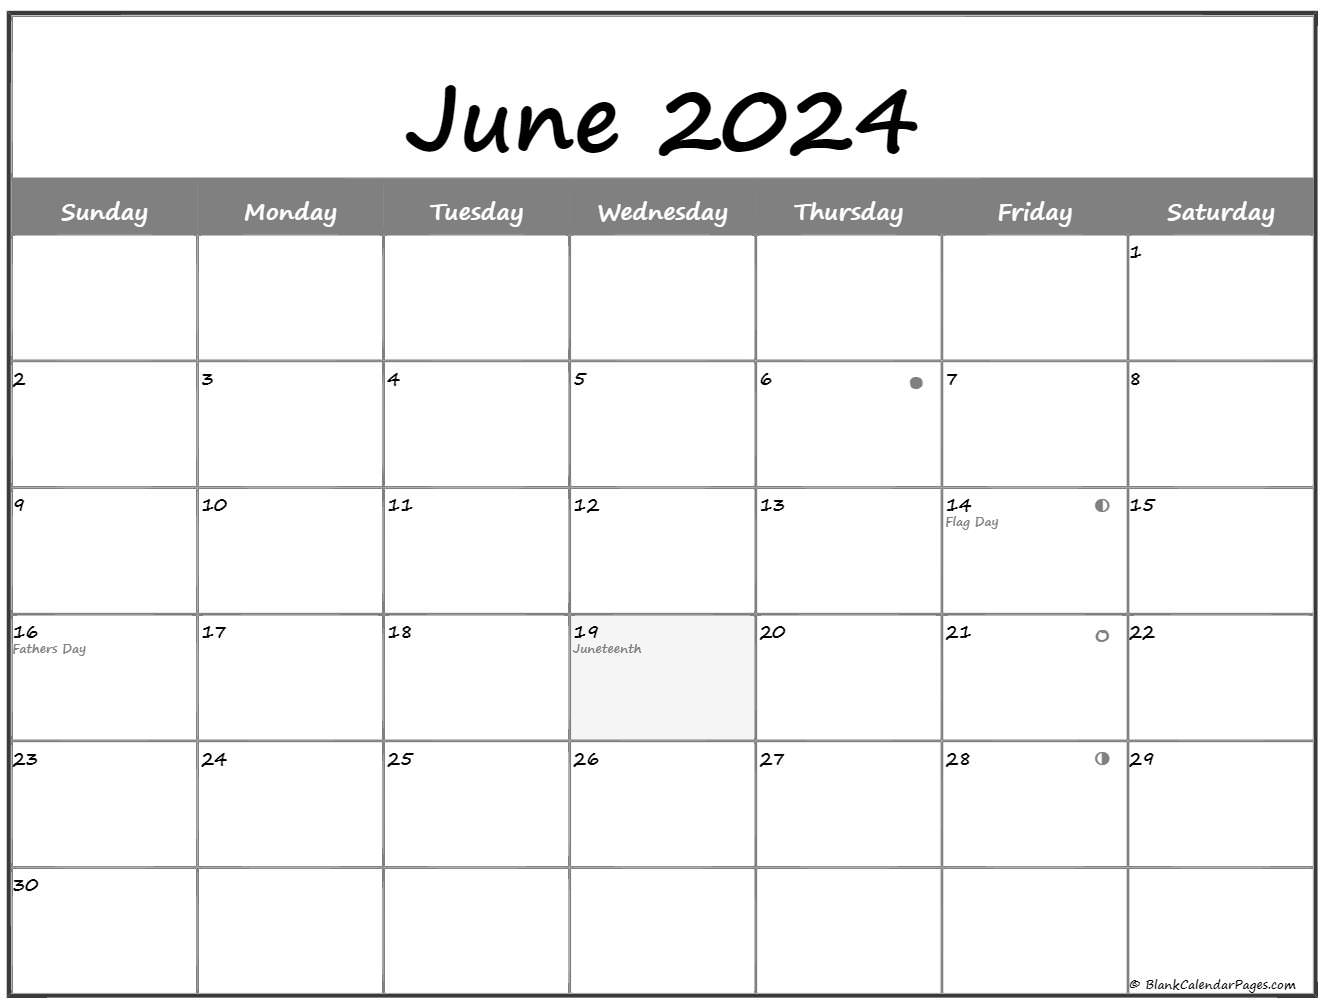 June 21 Lunar Calendar Moon Phase Calendar